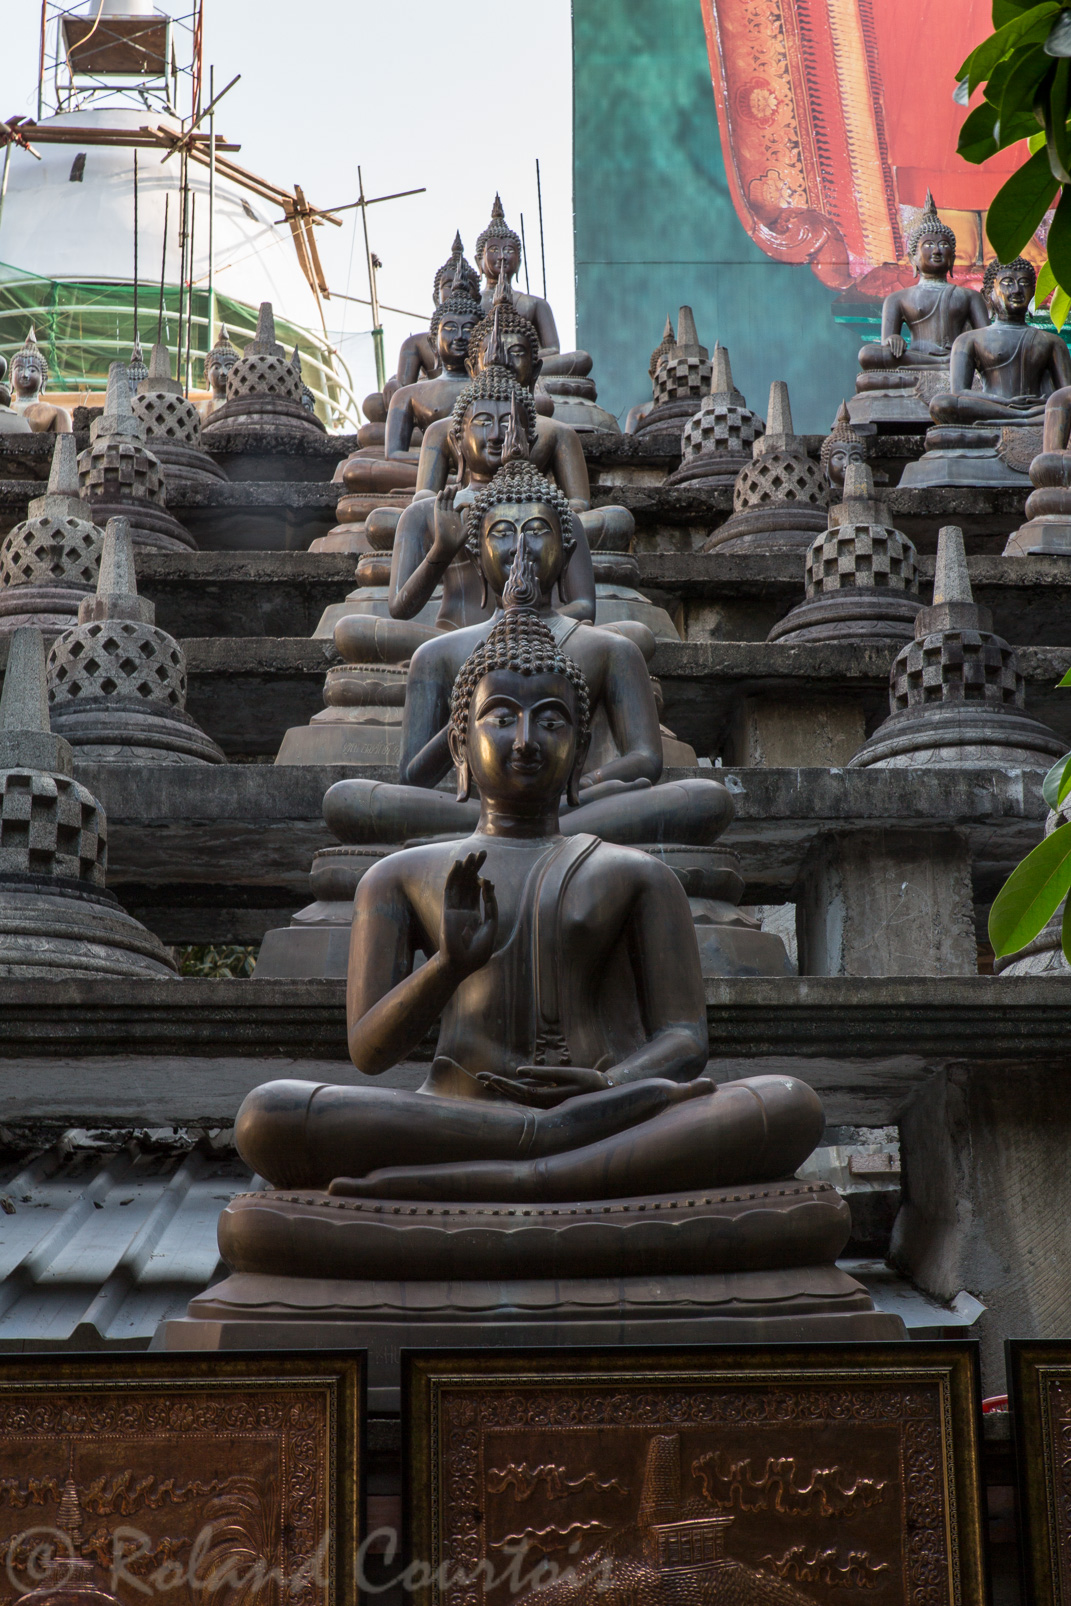 Temple bouddhiste Gangaramaya. Petits Bouddha et stupas comme à Borobudur.